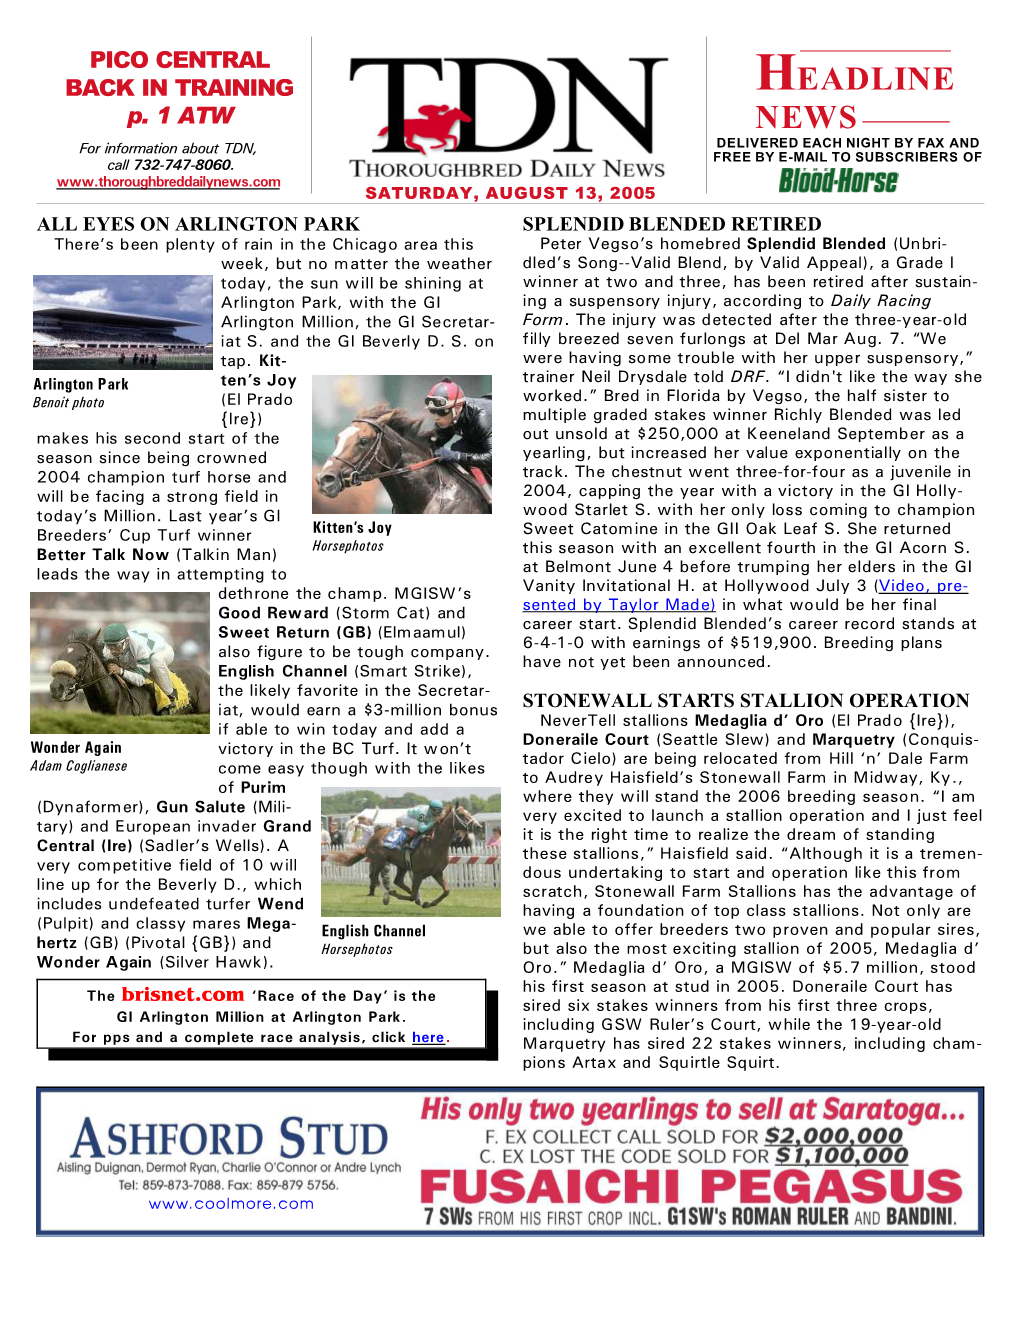 HEADLINE NEWS • 8/13/05 • PAGE 2 of 10